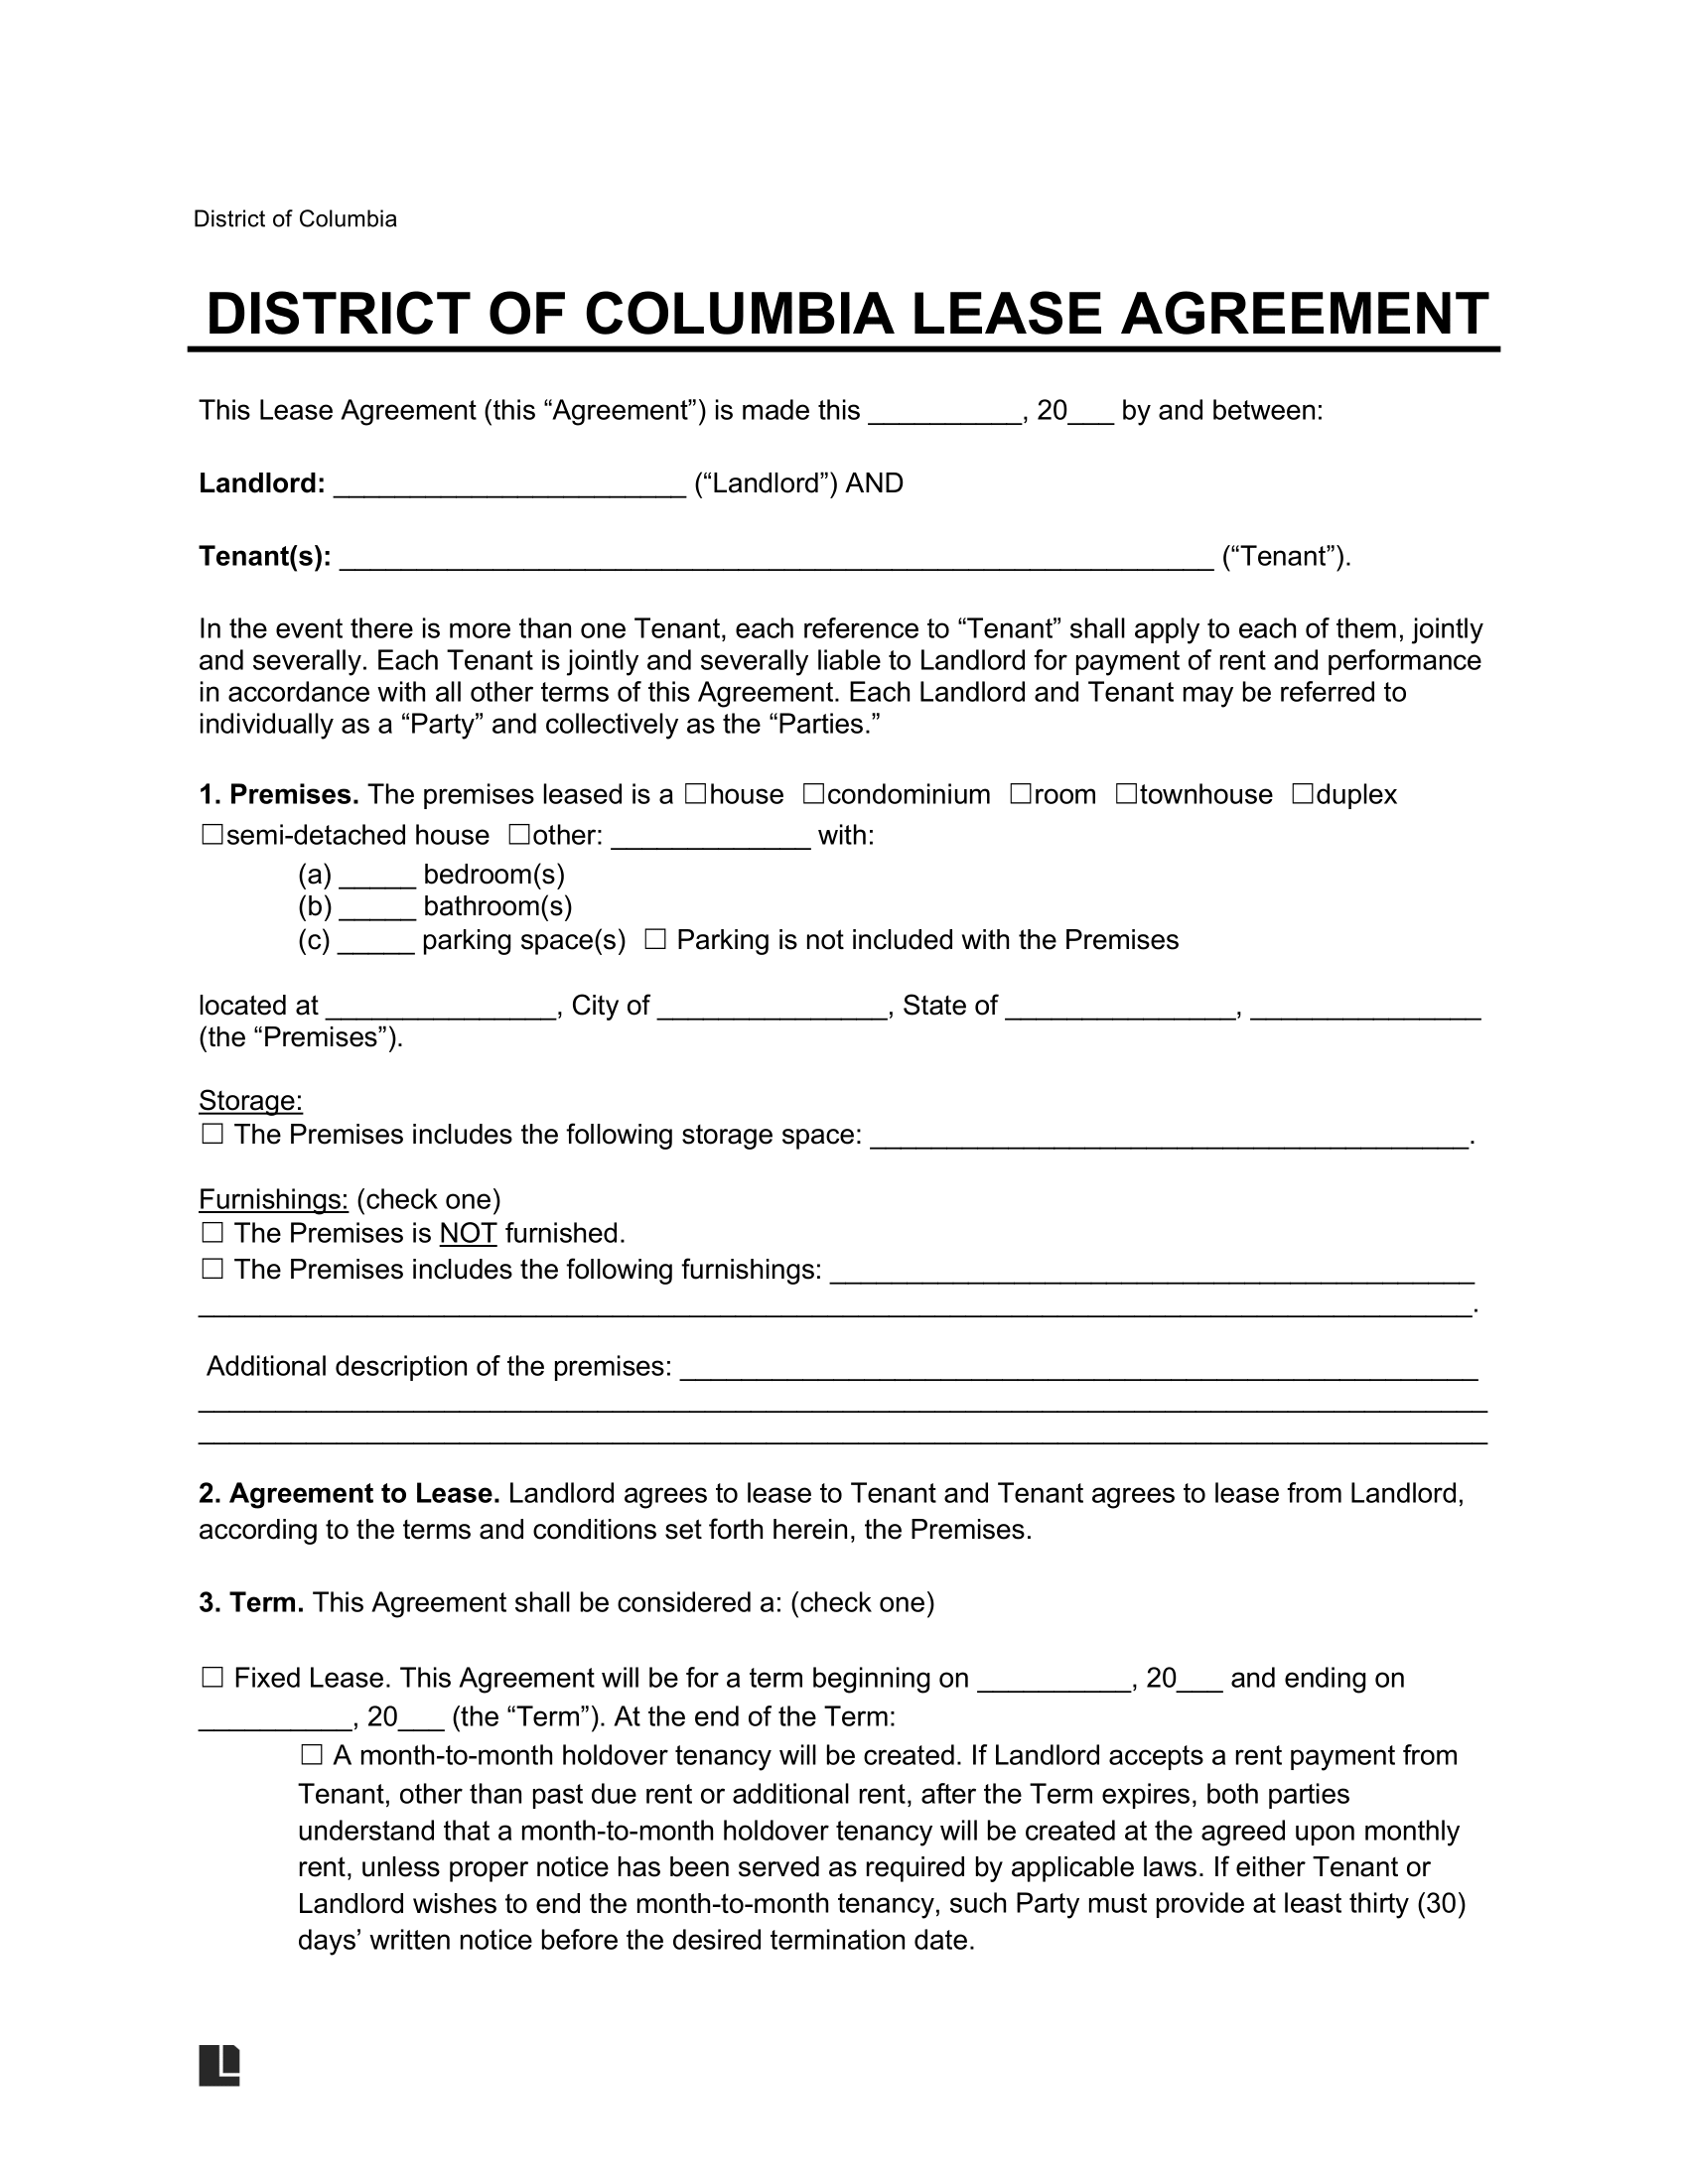 Washington DC Residential Lease Agreement